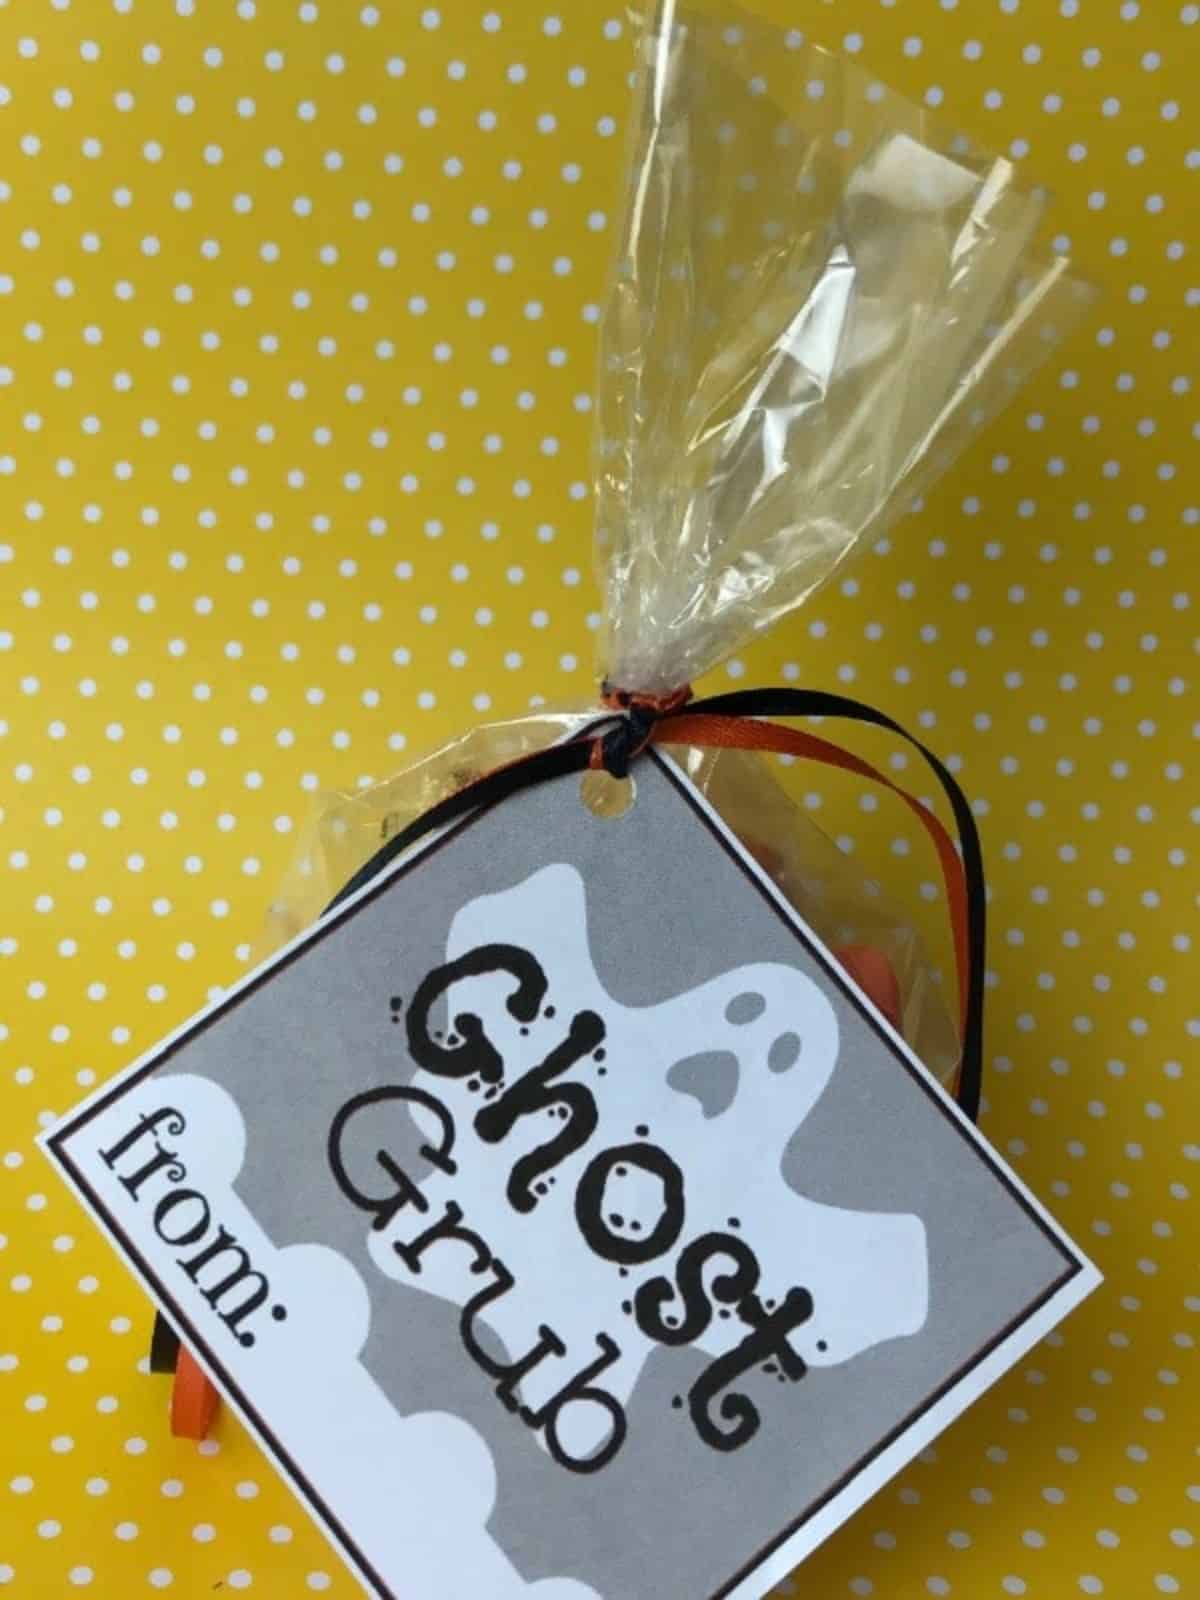 Halloween treat bag with ghost grub tag.